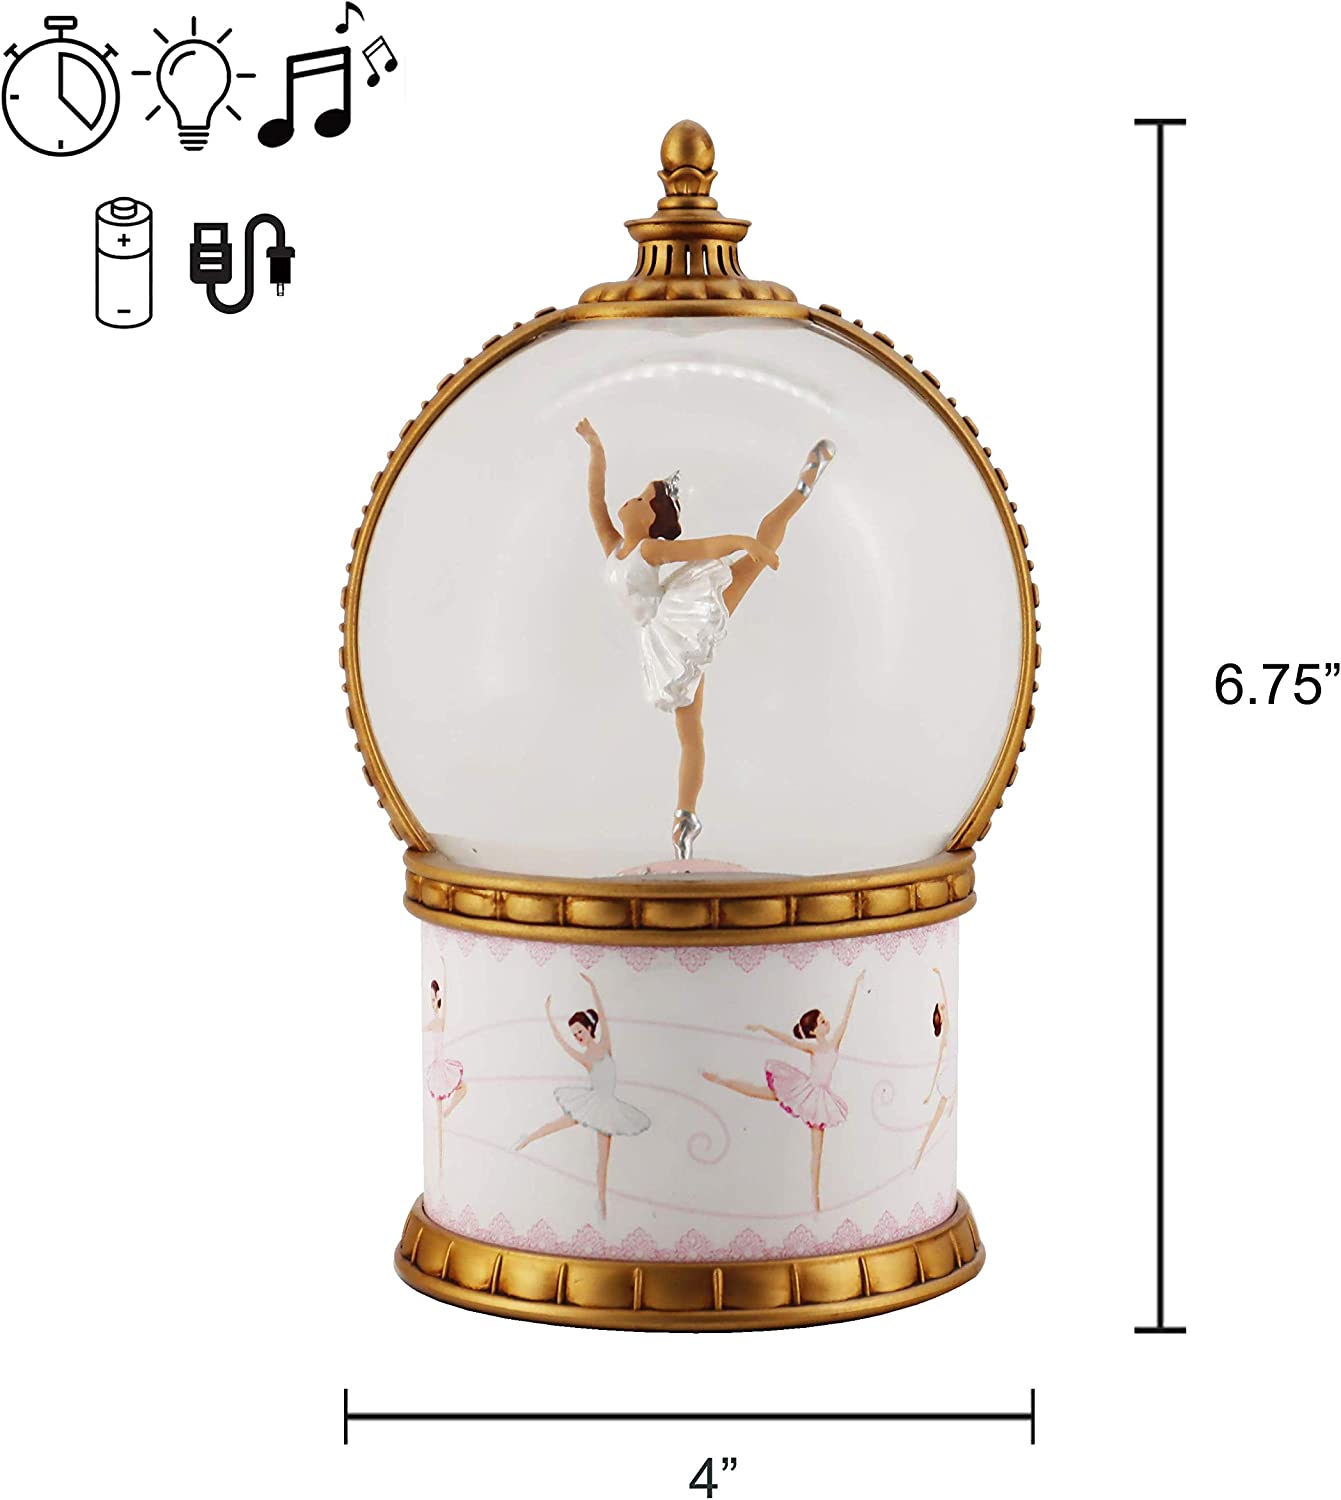 Creative Ballerina Lighted Musical Water Glitter Snow Globe